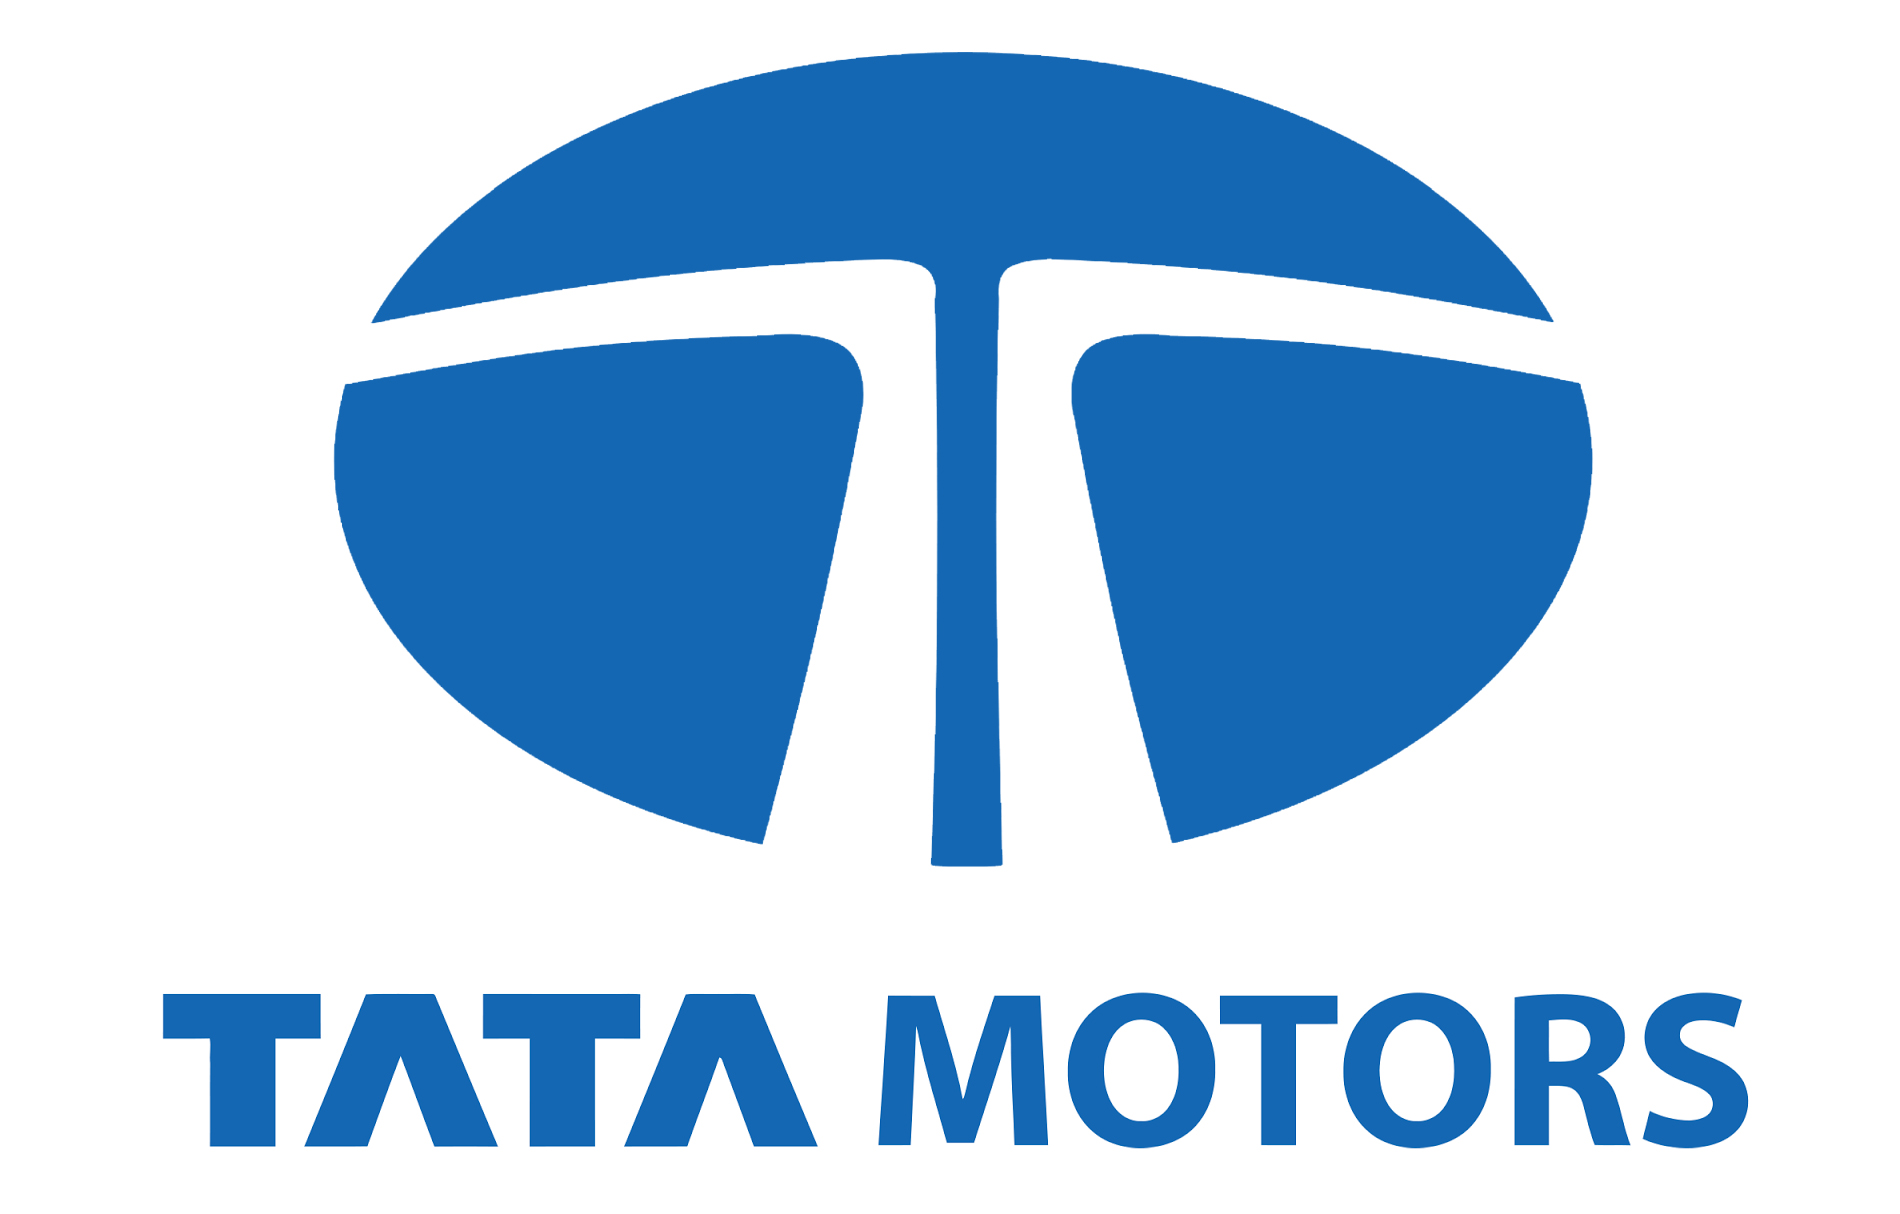 Tata Motors Cars Showroom - R A Motors Logo